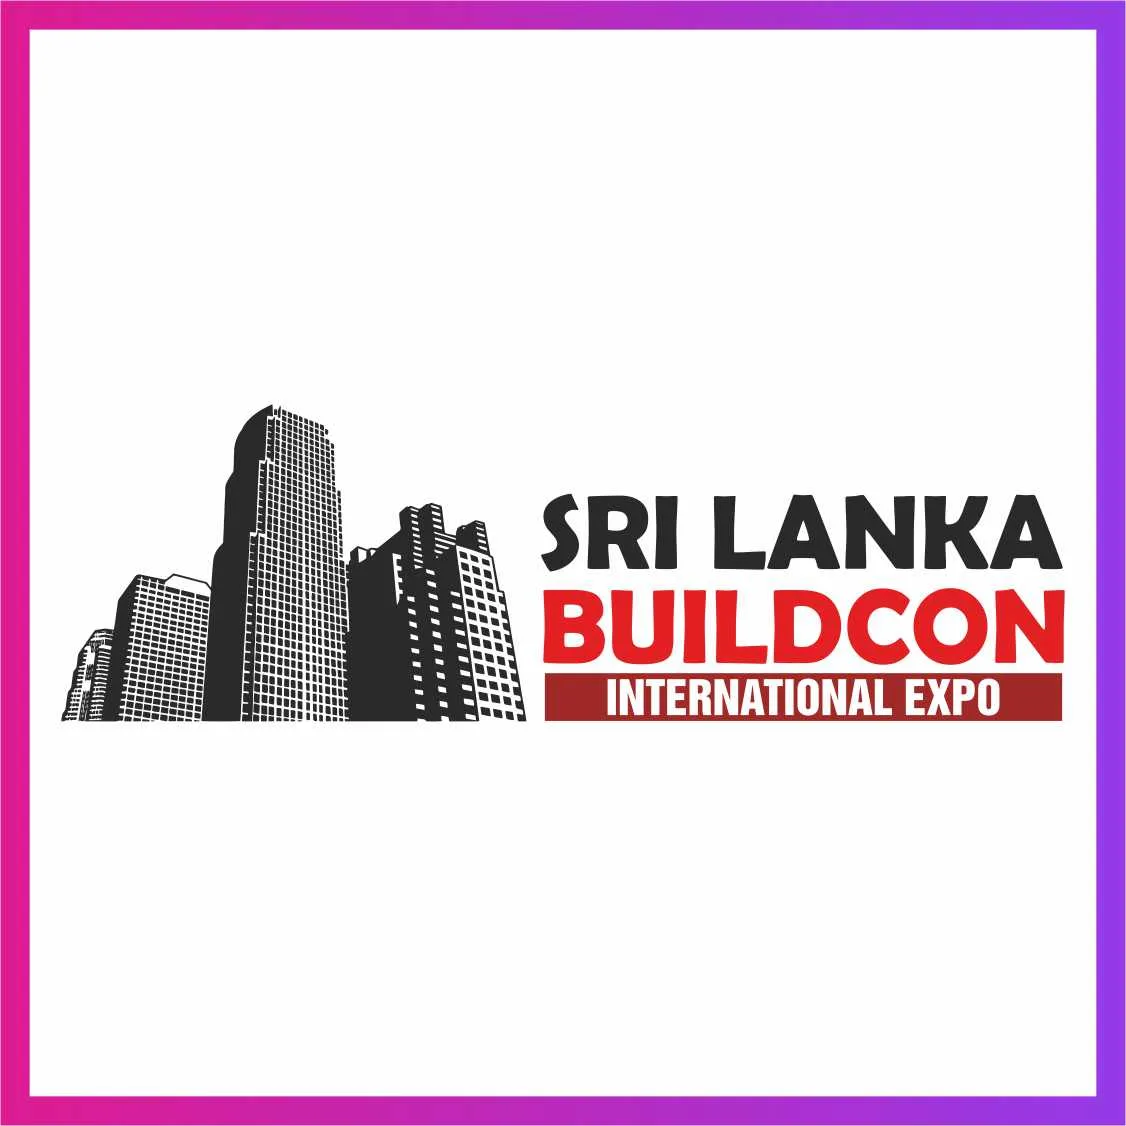 Sri Lanka BUILDCON International Expo 2015